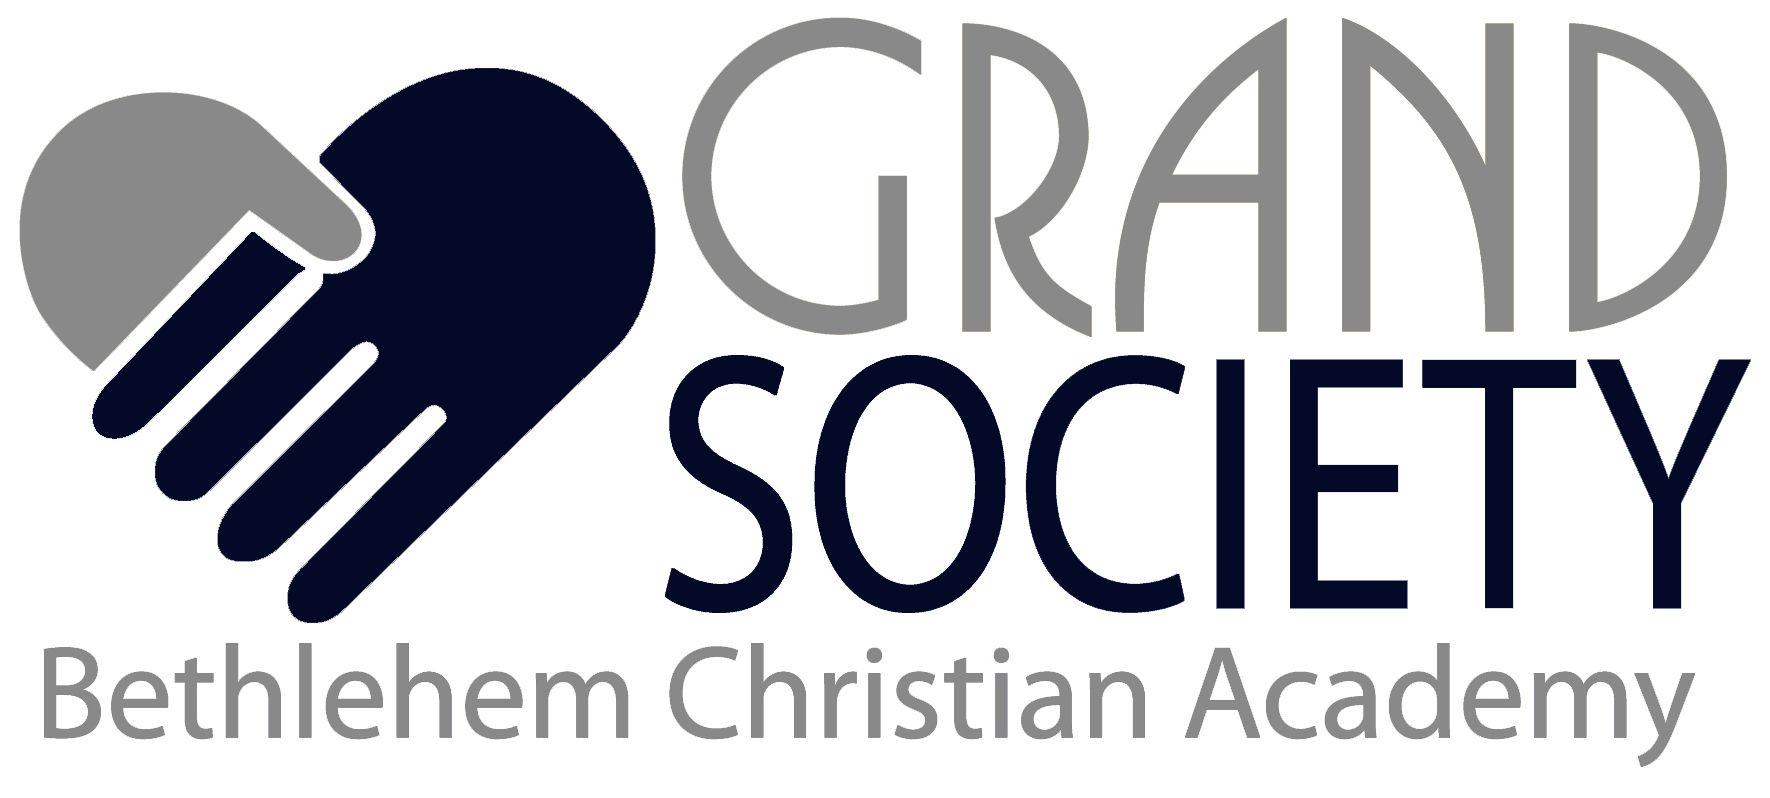 BCA Knights Logo - BCA Grand Society - Bethlehem Christian Academy